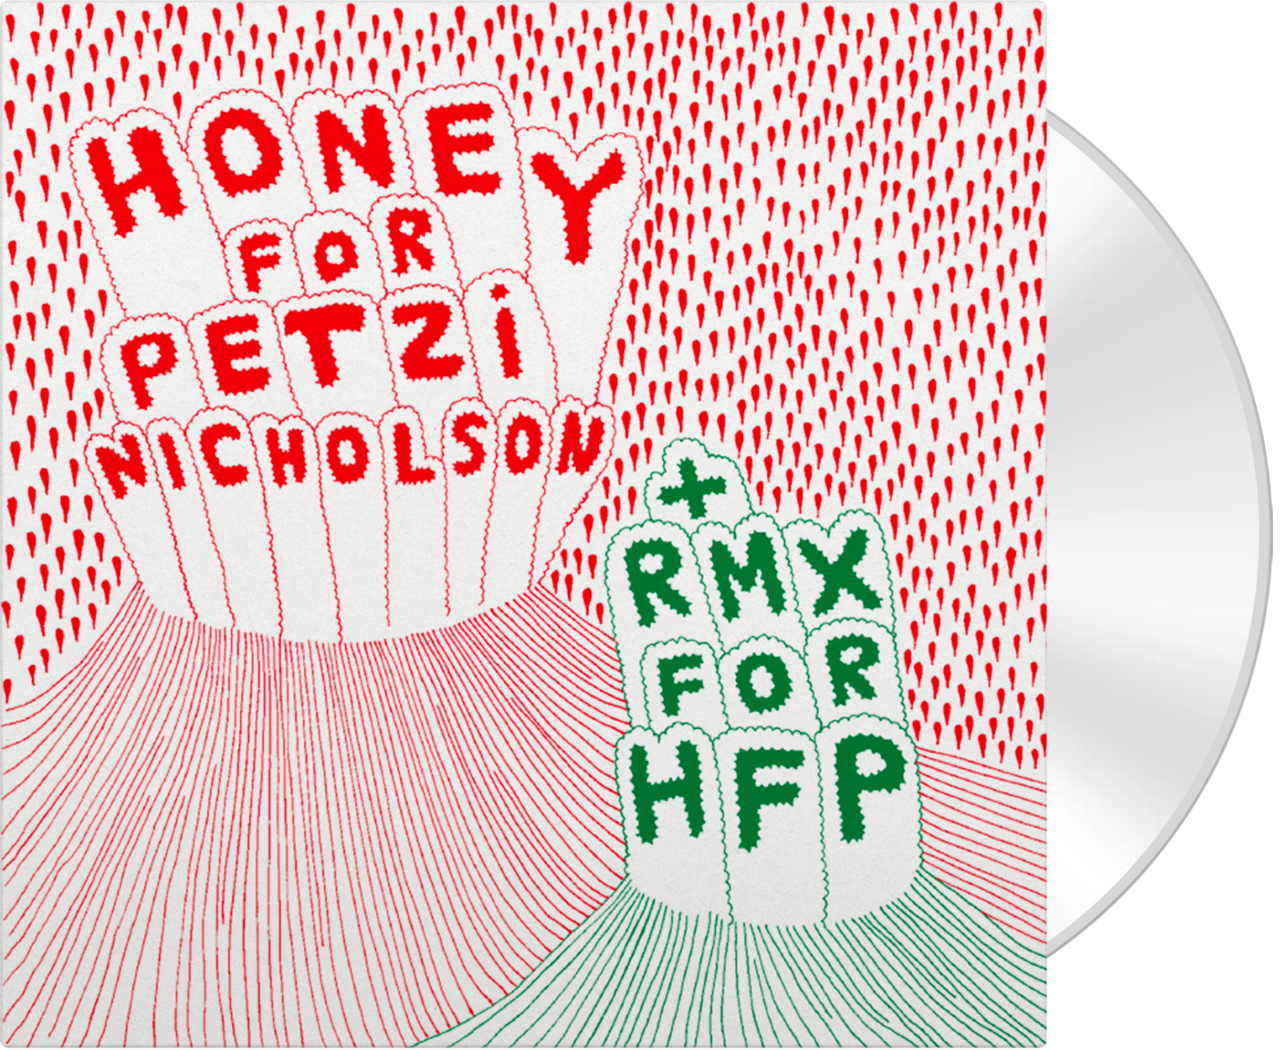 HONEY FOR PETZI - Nicholson + Rmx For HFP